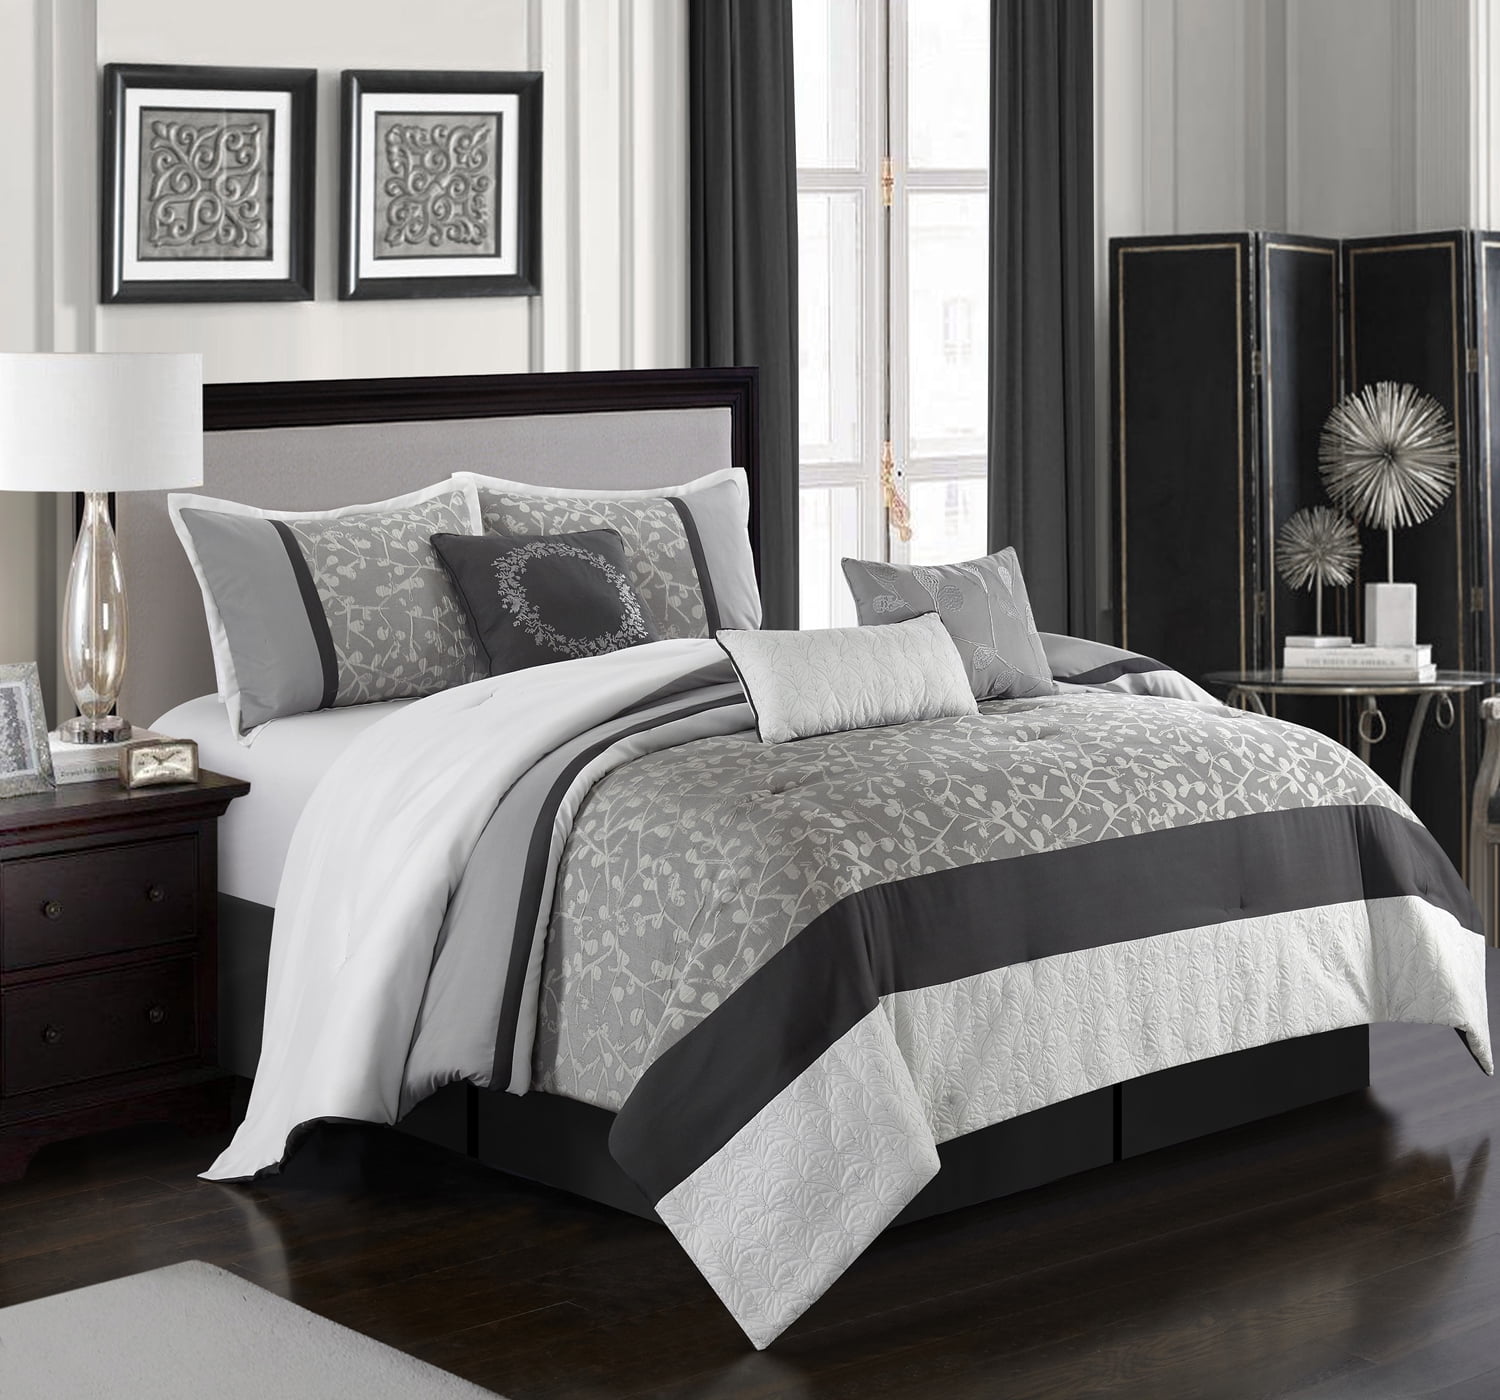 Lanco Black And Grey Comforter Set Queen Size 7 Piece Jacquard